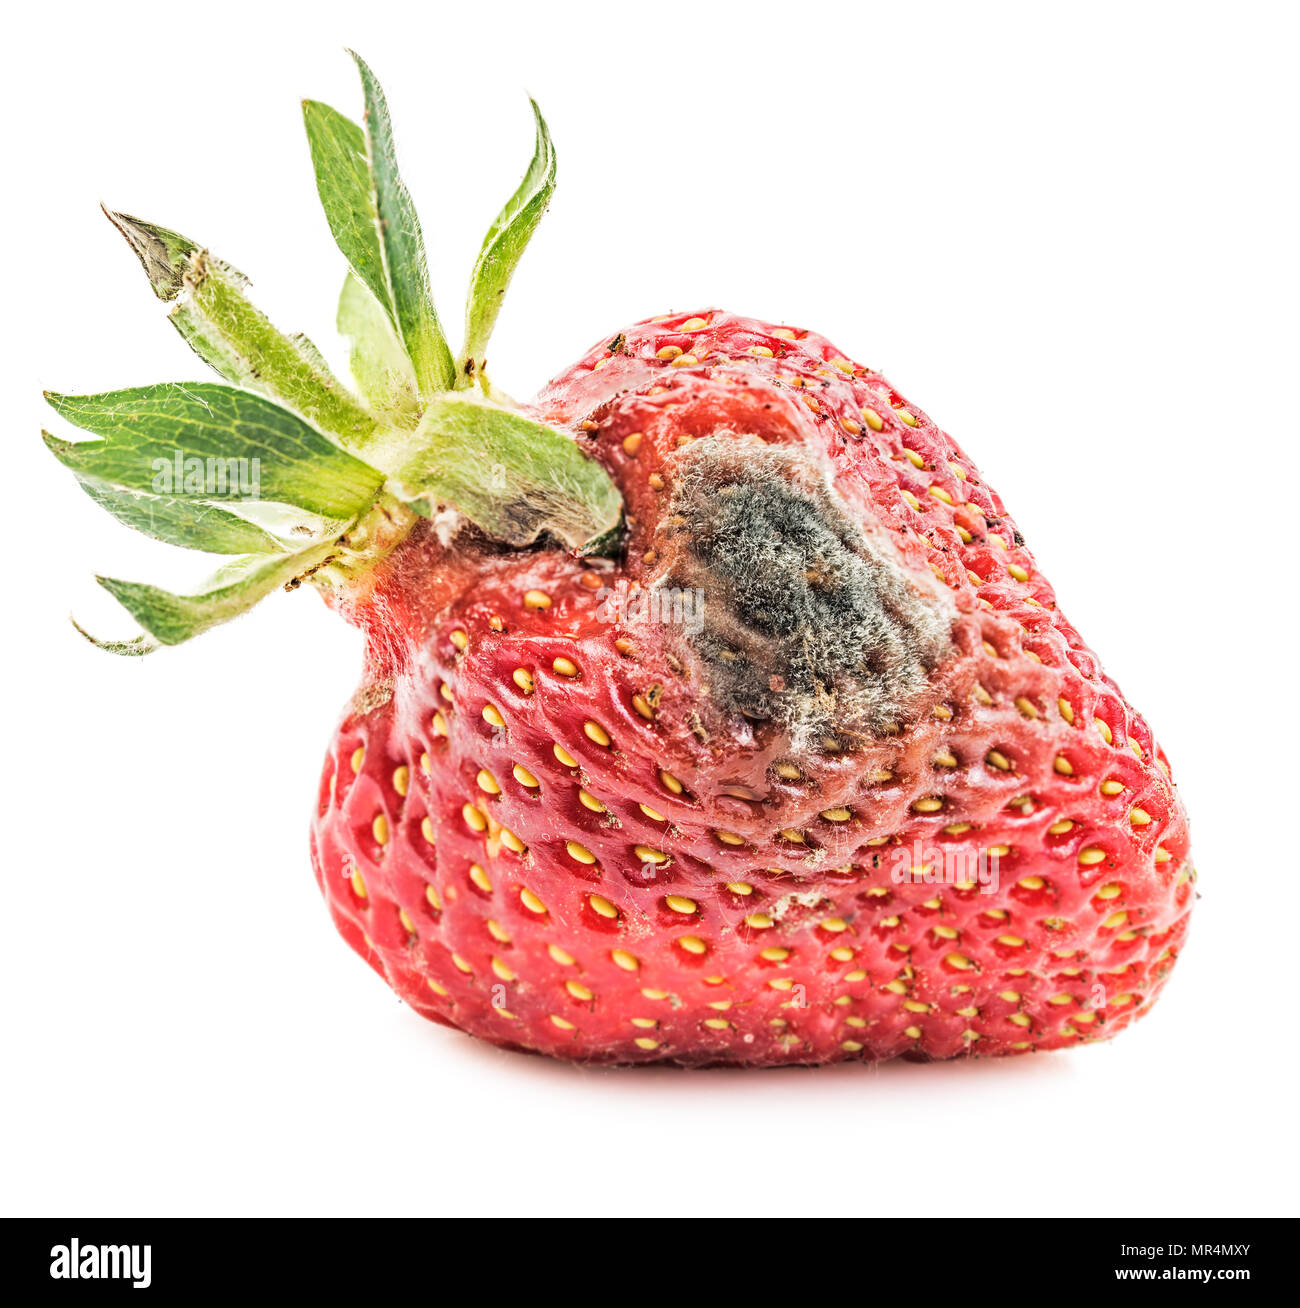 https://c8.alamy.com/comp/MR4MXY/rotten-strawberry-isolated-on-white-background-moldy-fruits-MR4MXY.jpg